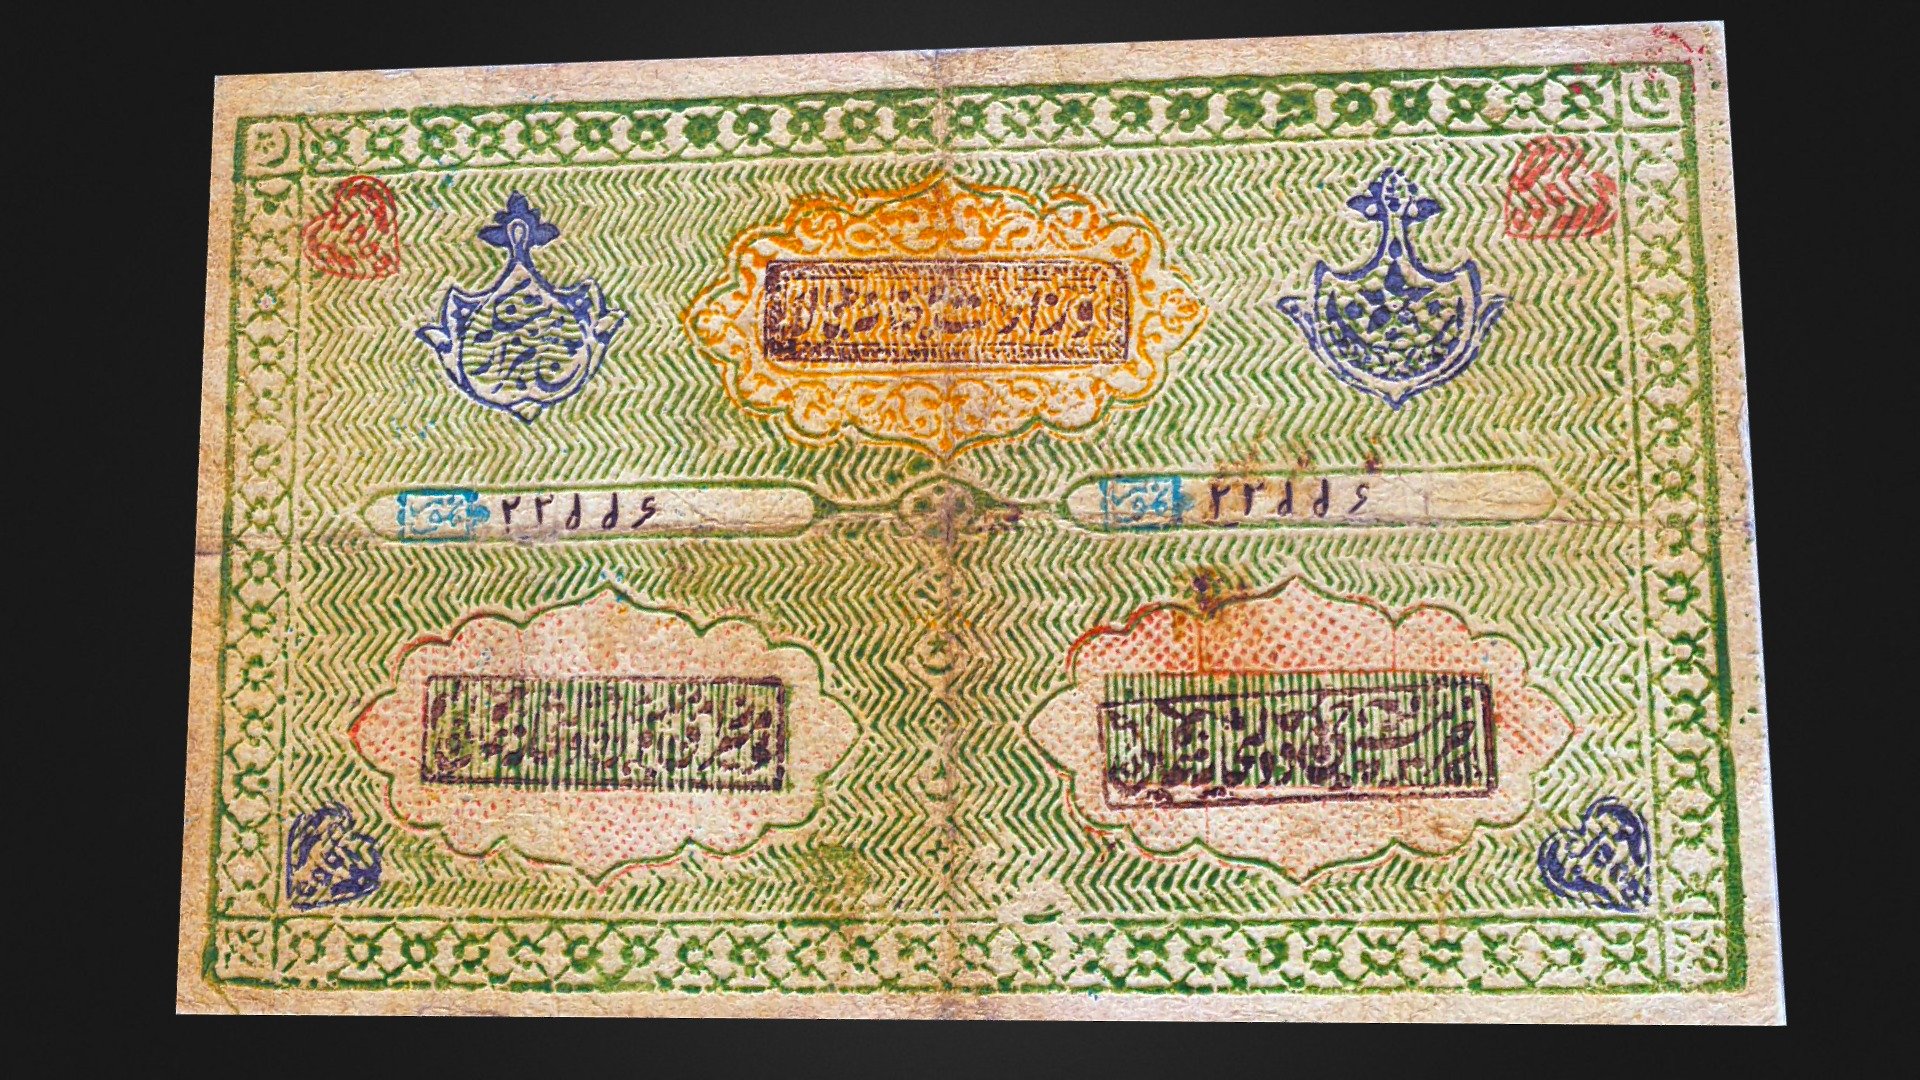 Banknote of Bukhara Emirate (1918).